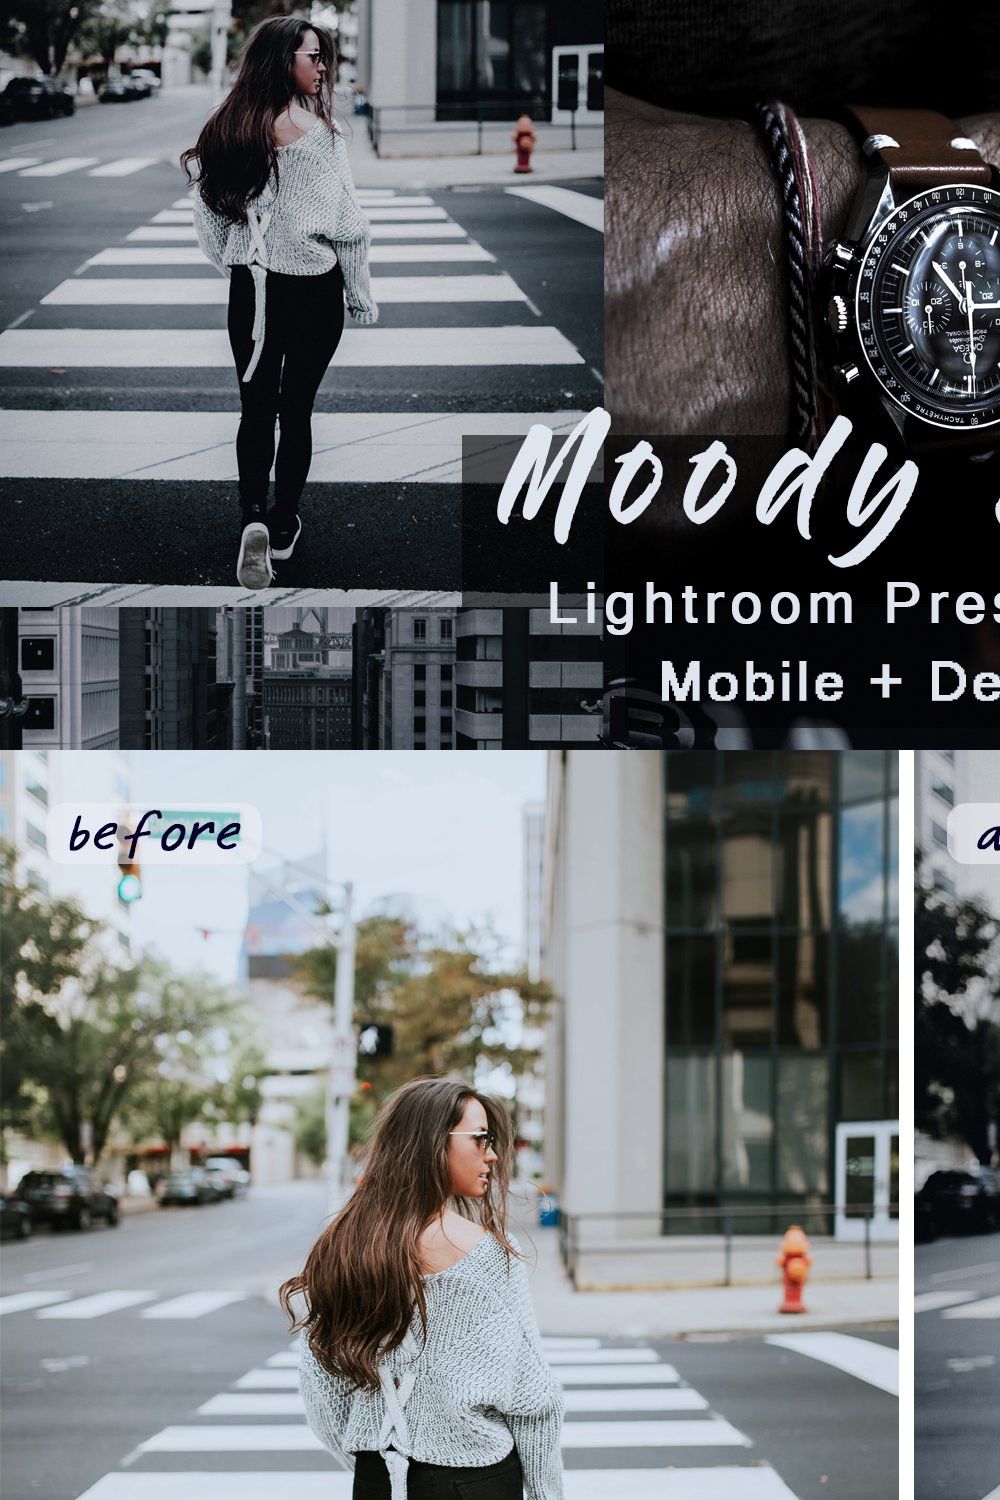 Moody Black - Lightroom Presets pinterest preview image.